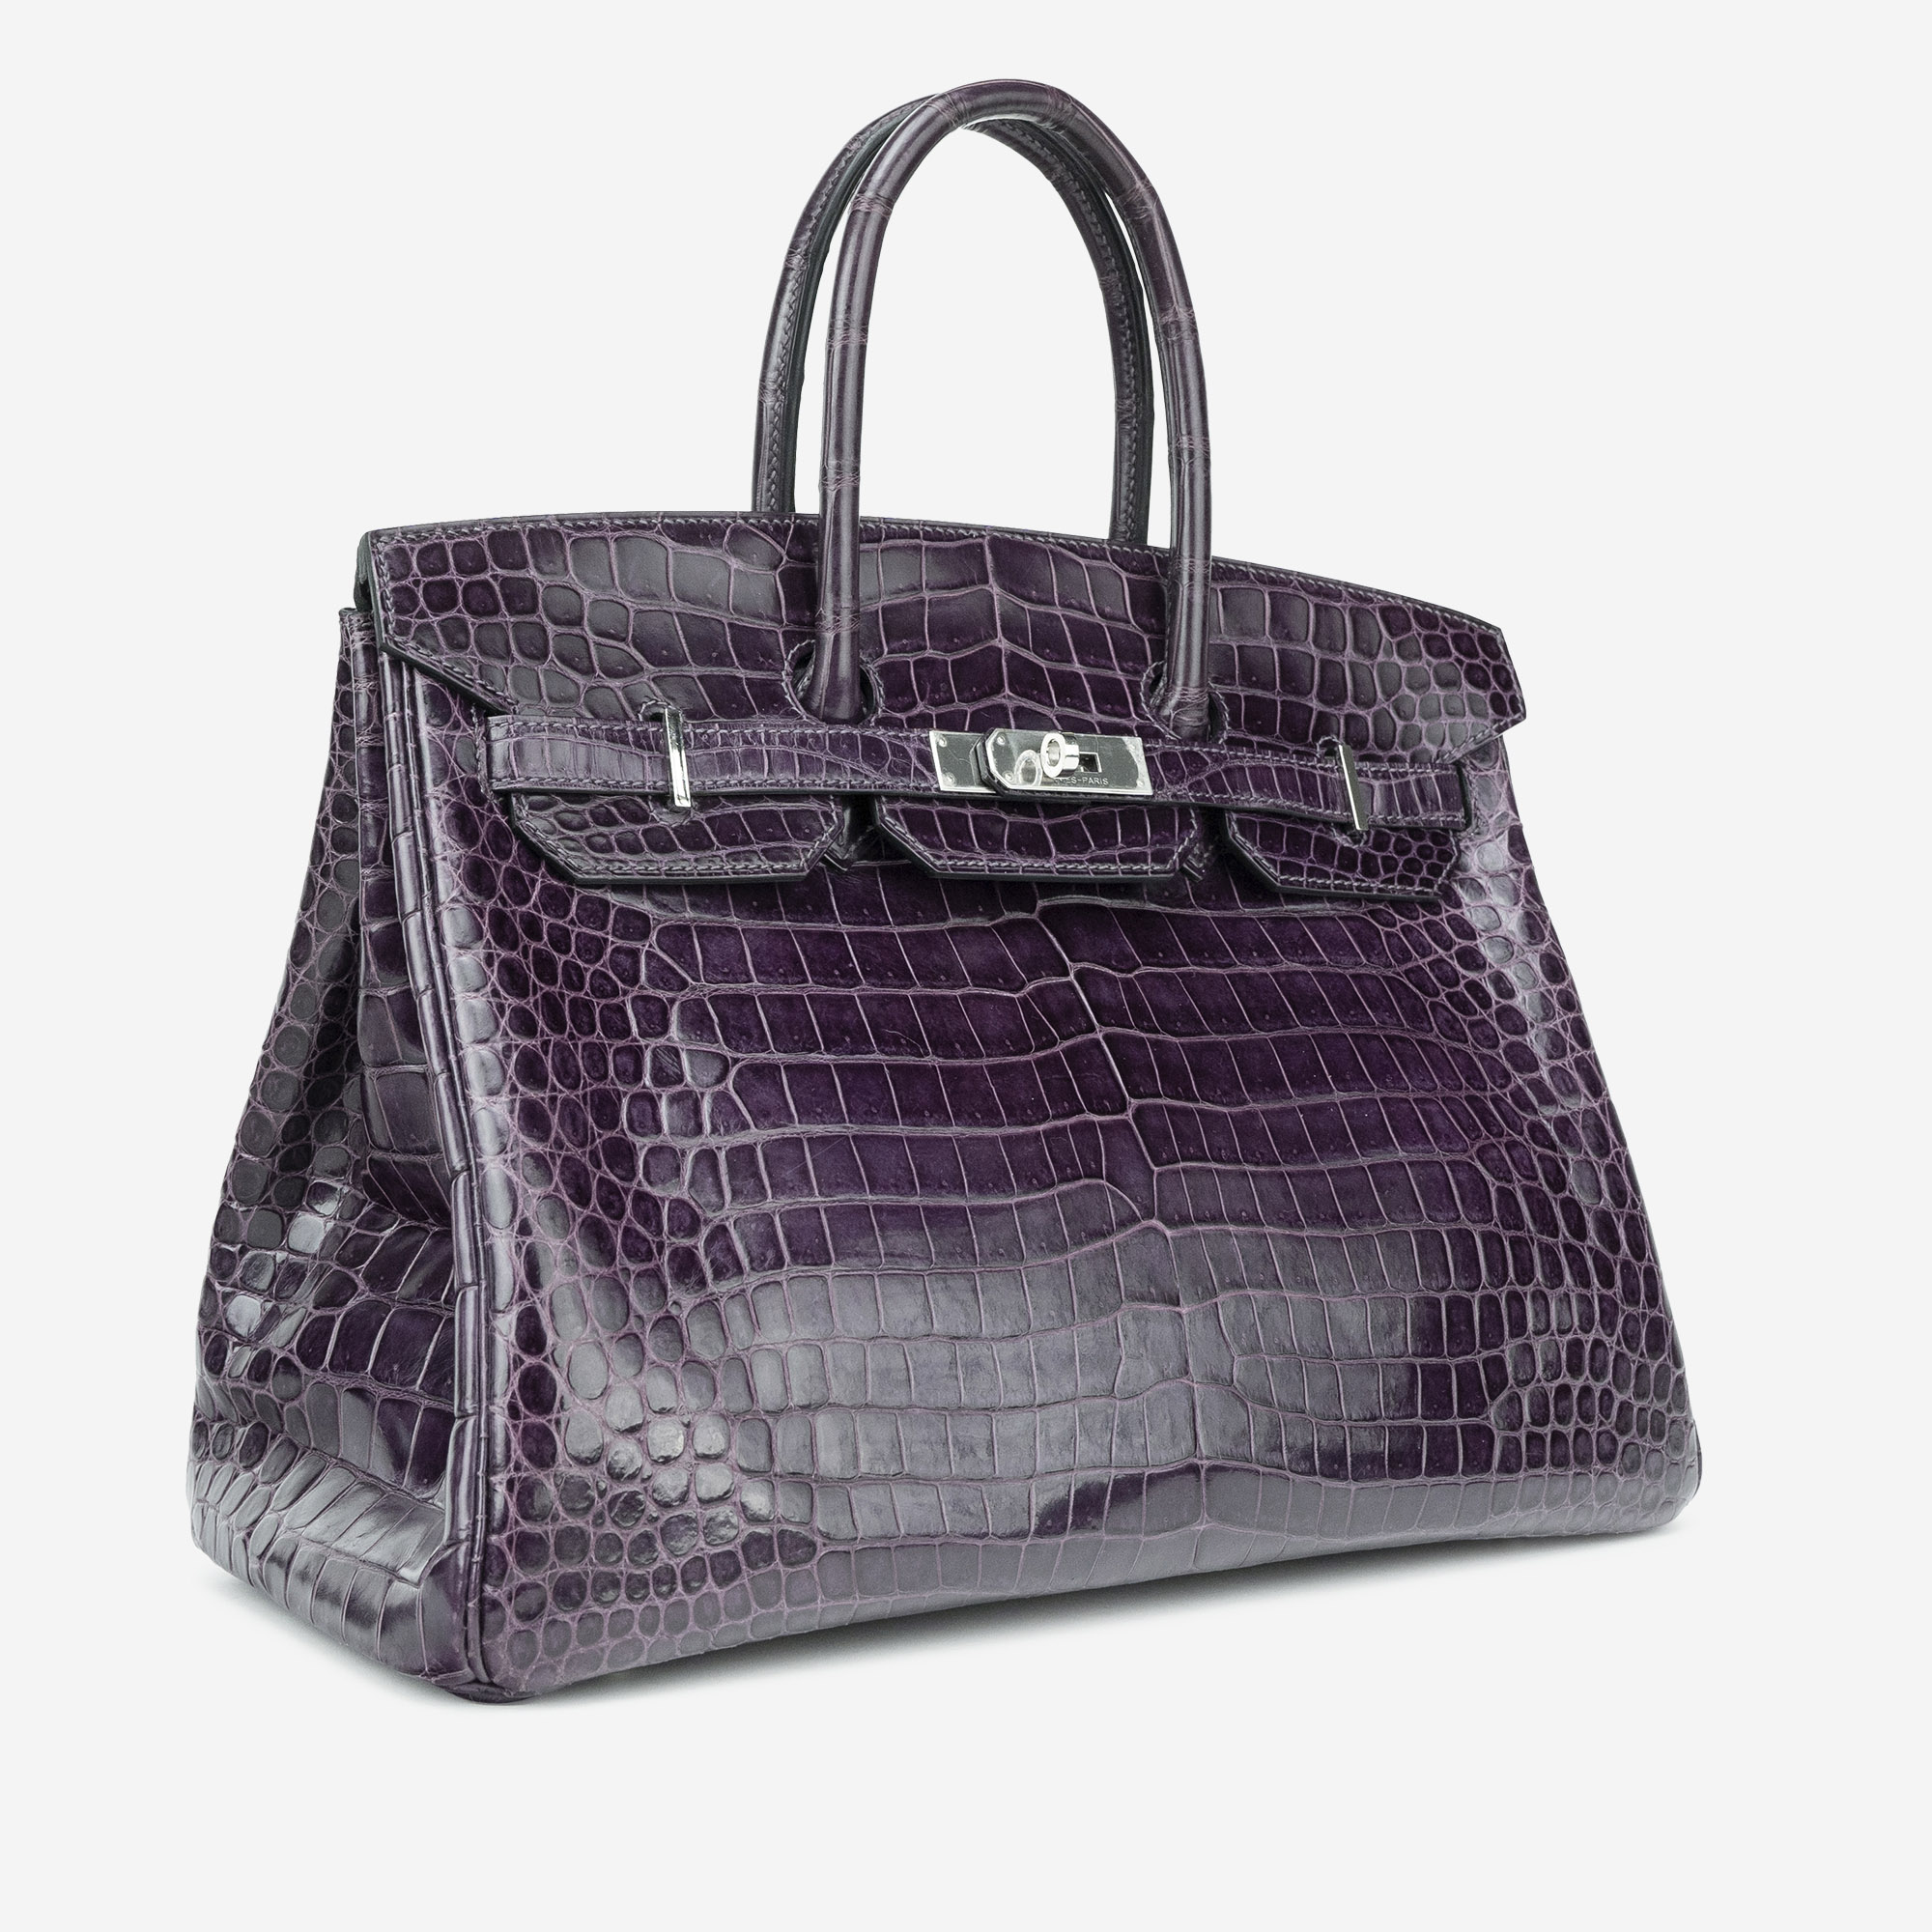 Hermès Birkin 35 Crocodile Amethyst Bag - Title, Color